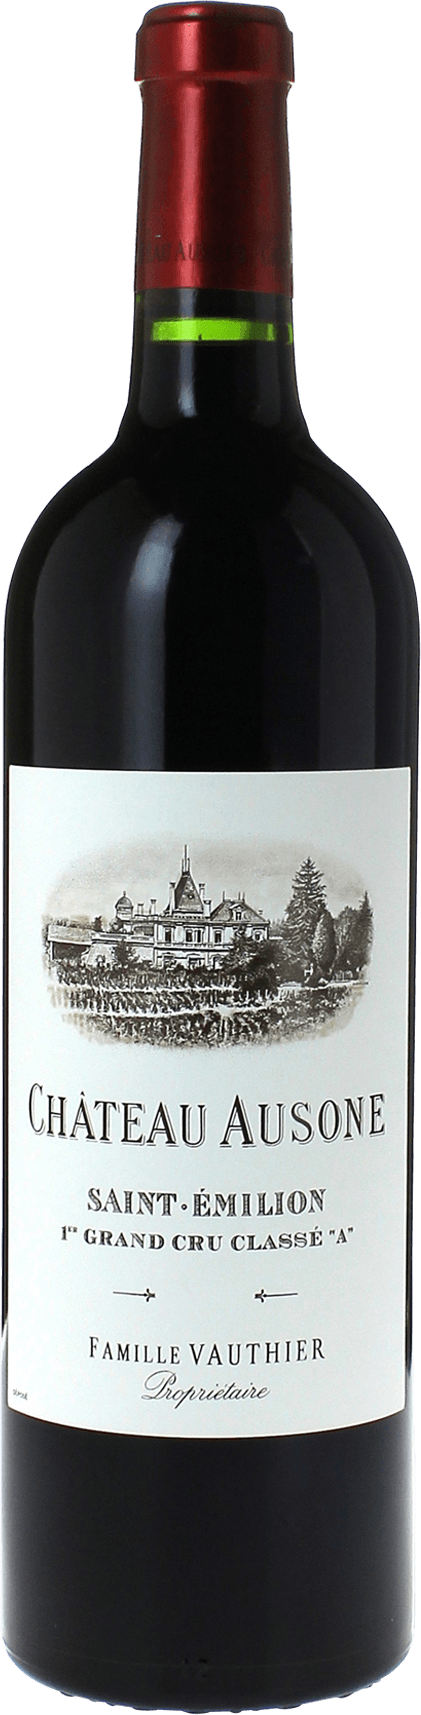 Château Angelus 2016 - Vins prestigieux